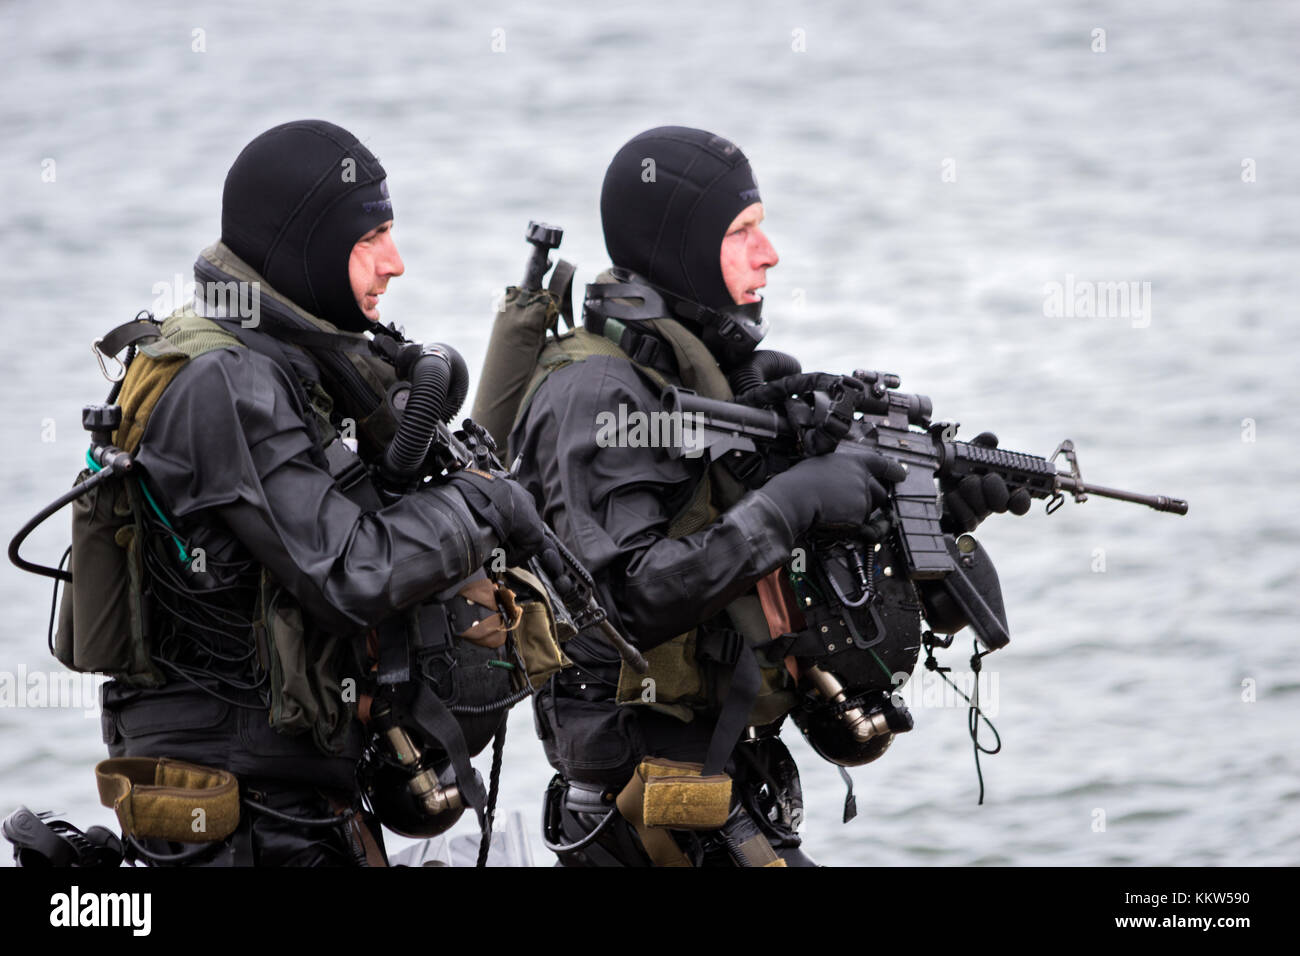 DEN HELDER, THE NETHERLANDS - JUN 23, 2013: Special Forces combat diver during an amphibious assault demo at the Dutch Navy Days. Stock Photo